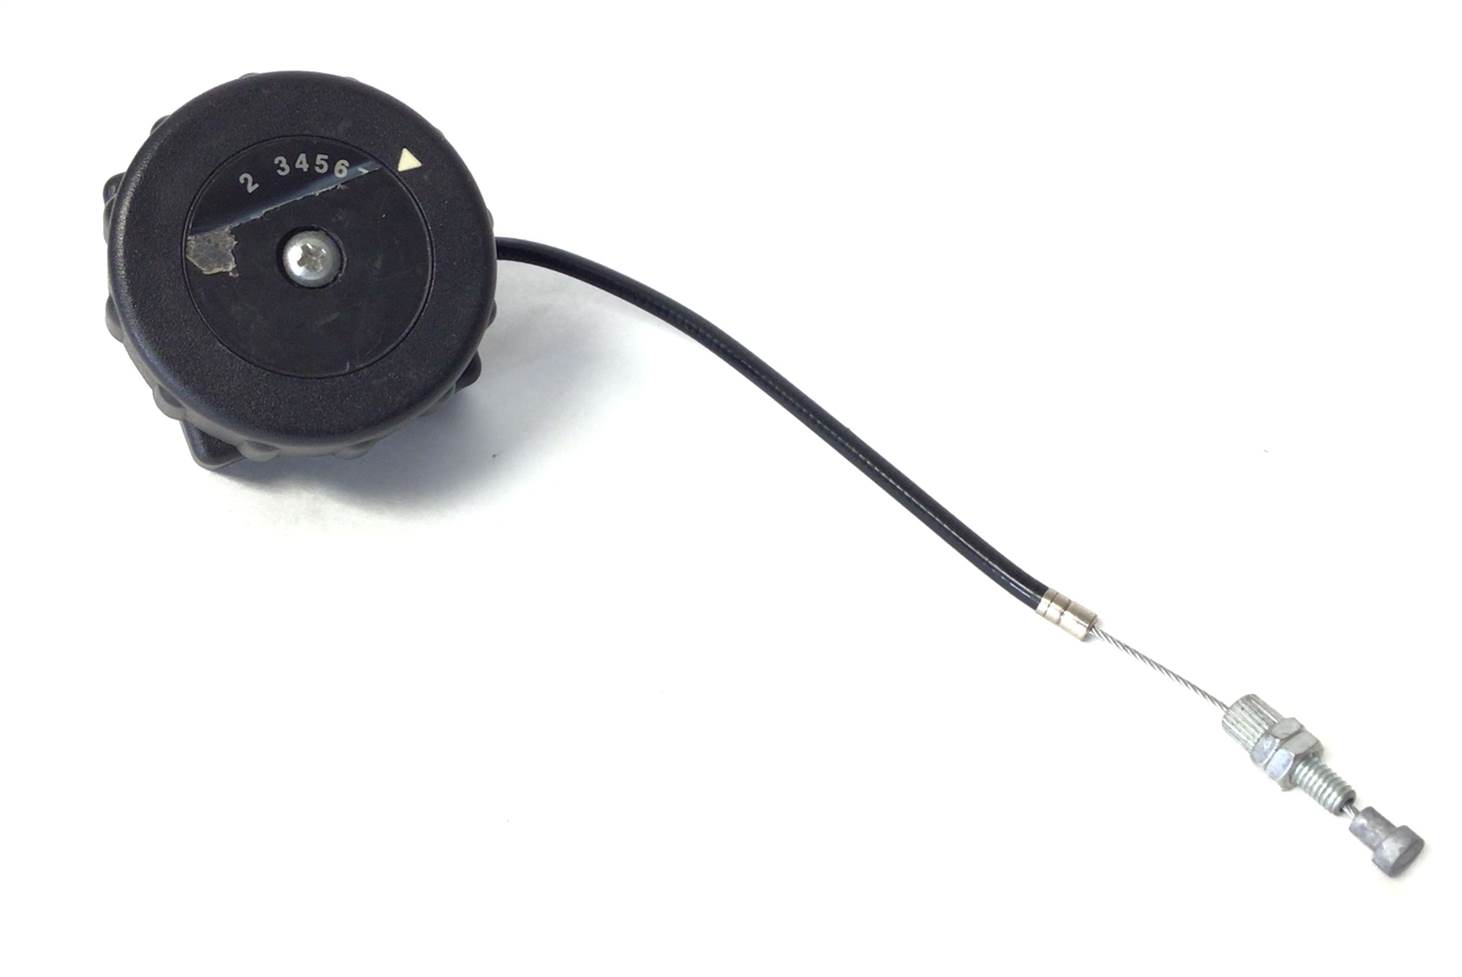 Magnetic Brake Control Mechanism - Tension Knob (Used)